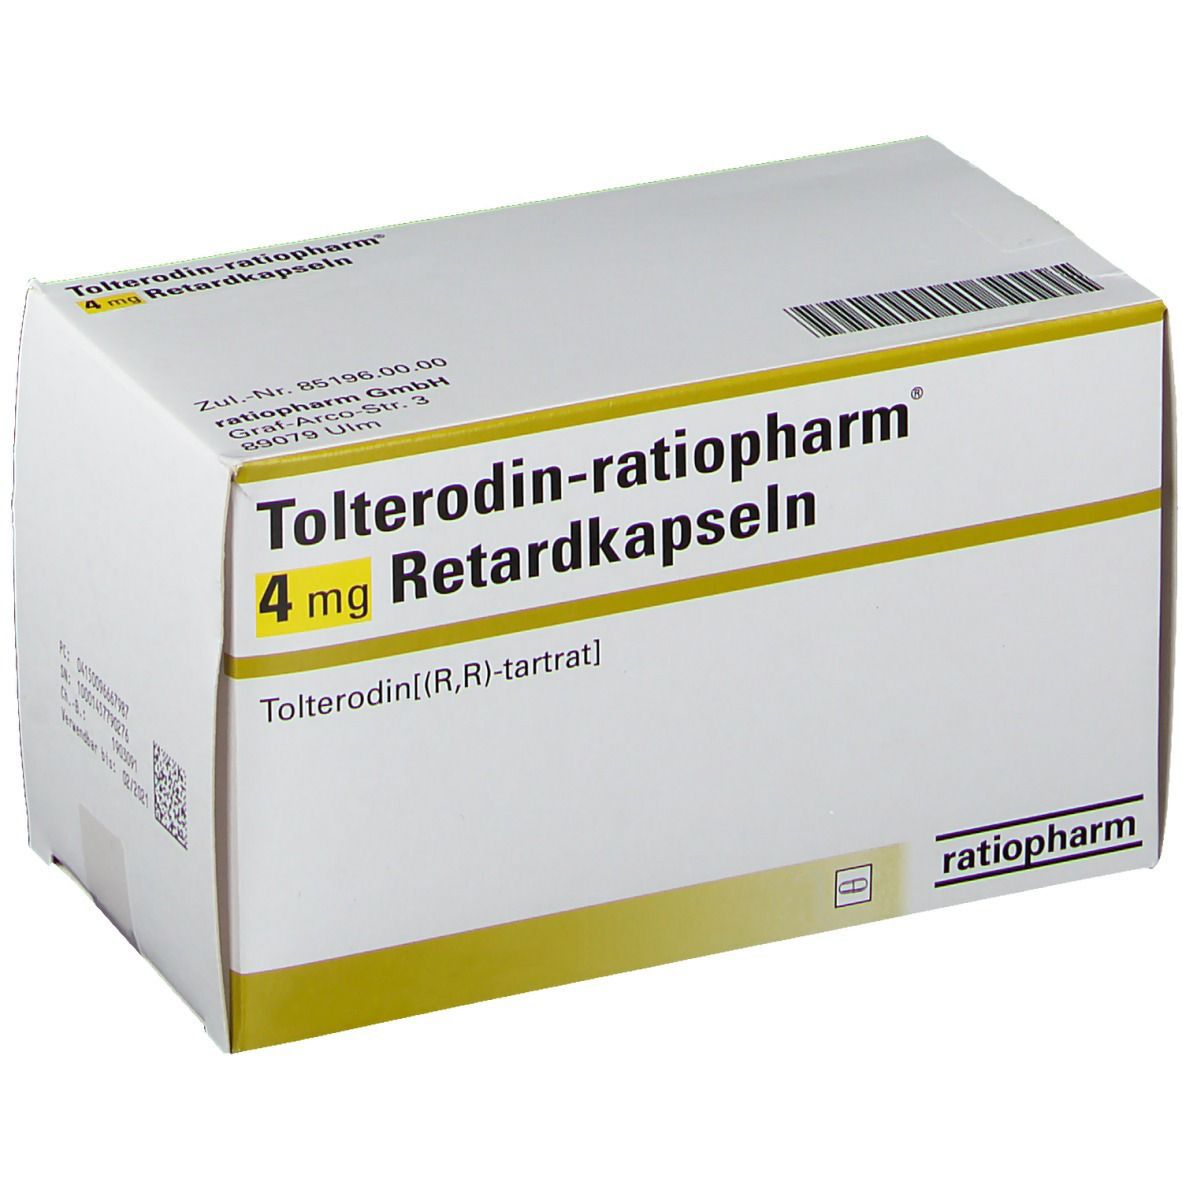 Tolterodin-ratiopharm® 4 mg